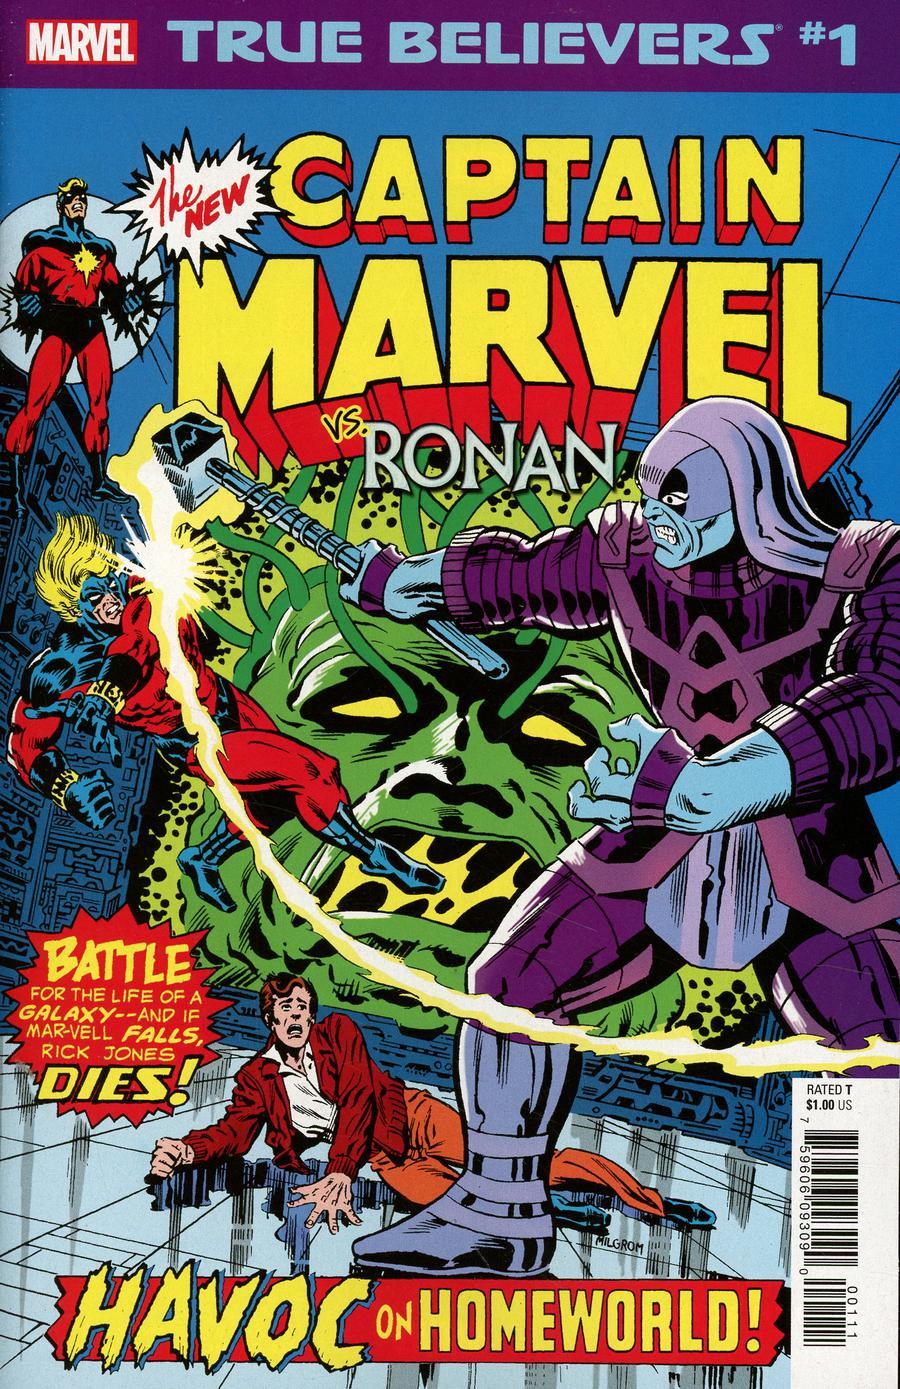 True Believers Captain Marvel vs Ronan Vol. 1 #1